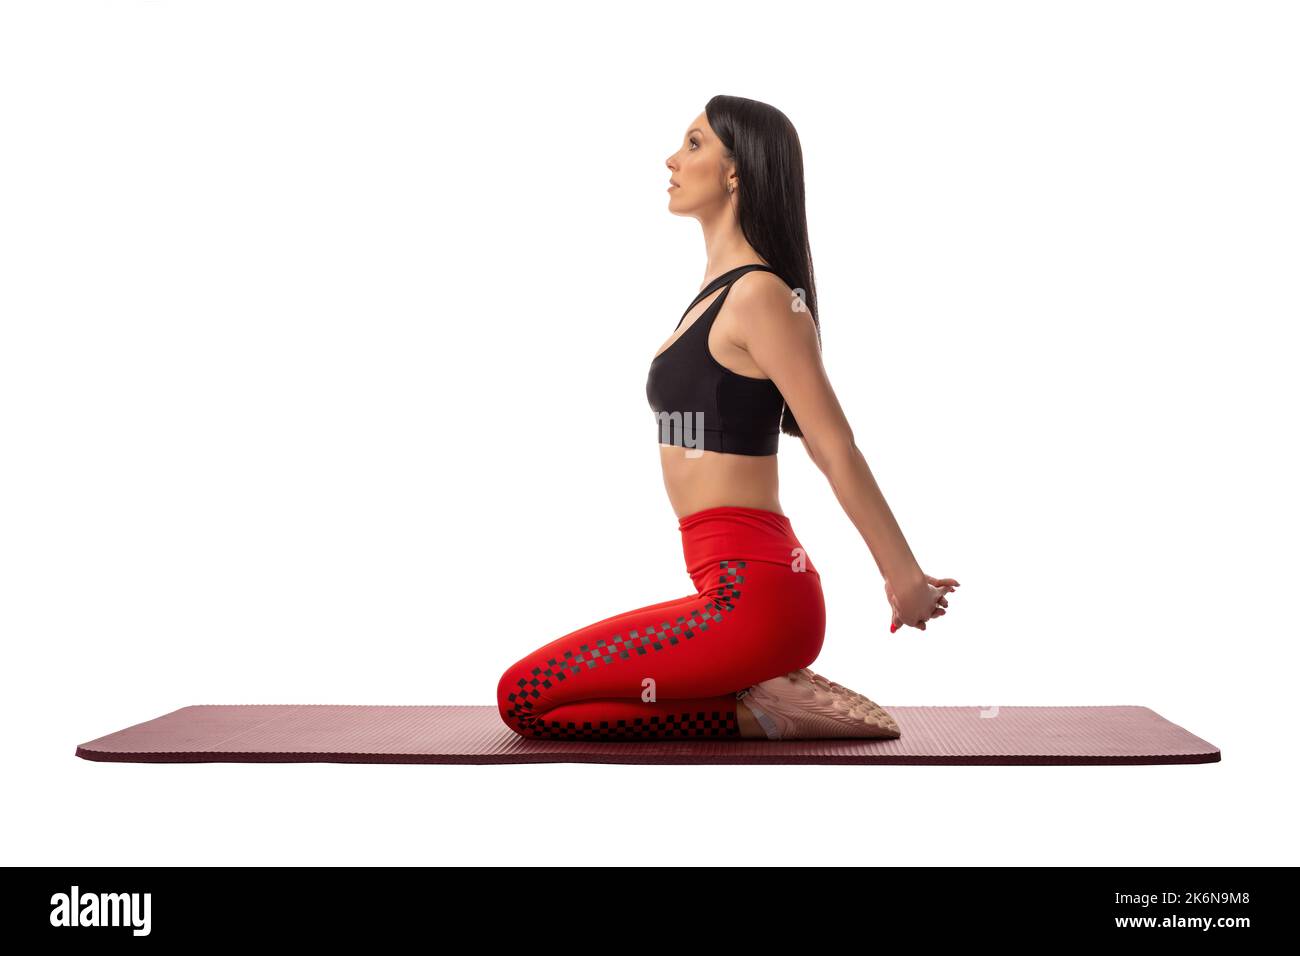 Slim woman doing yoga in pose Stock Photo